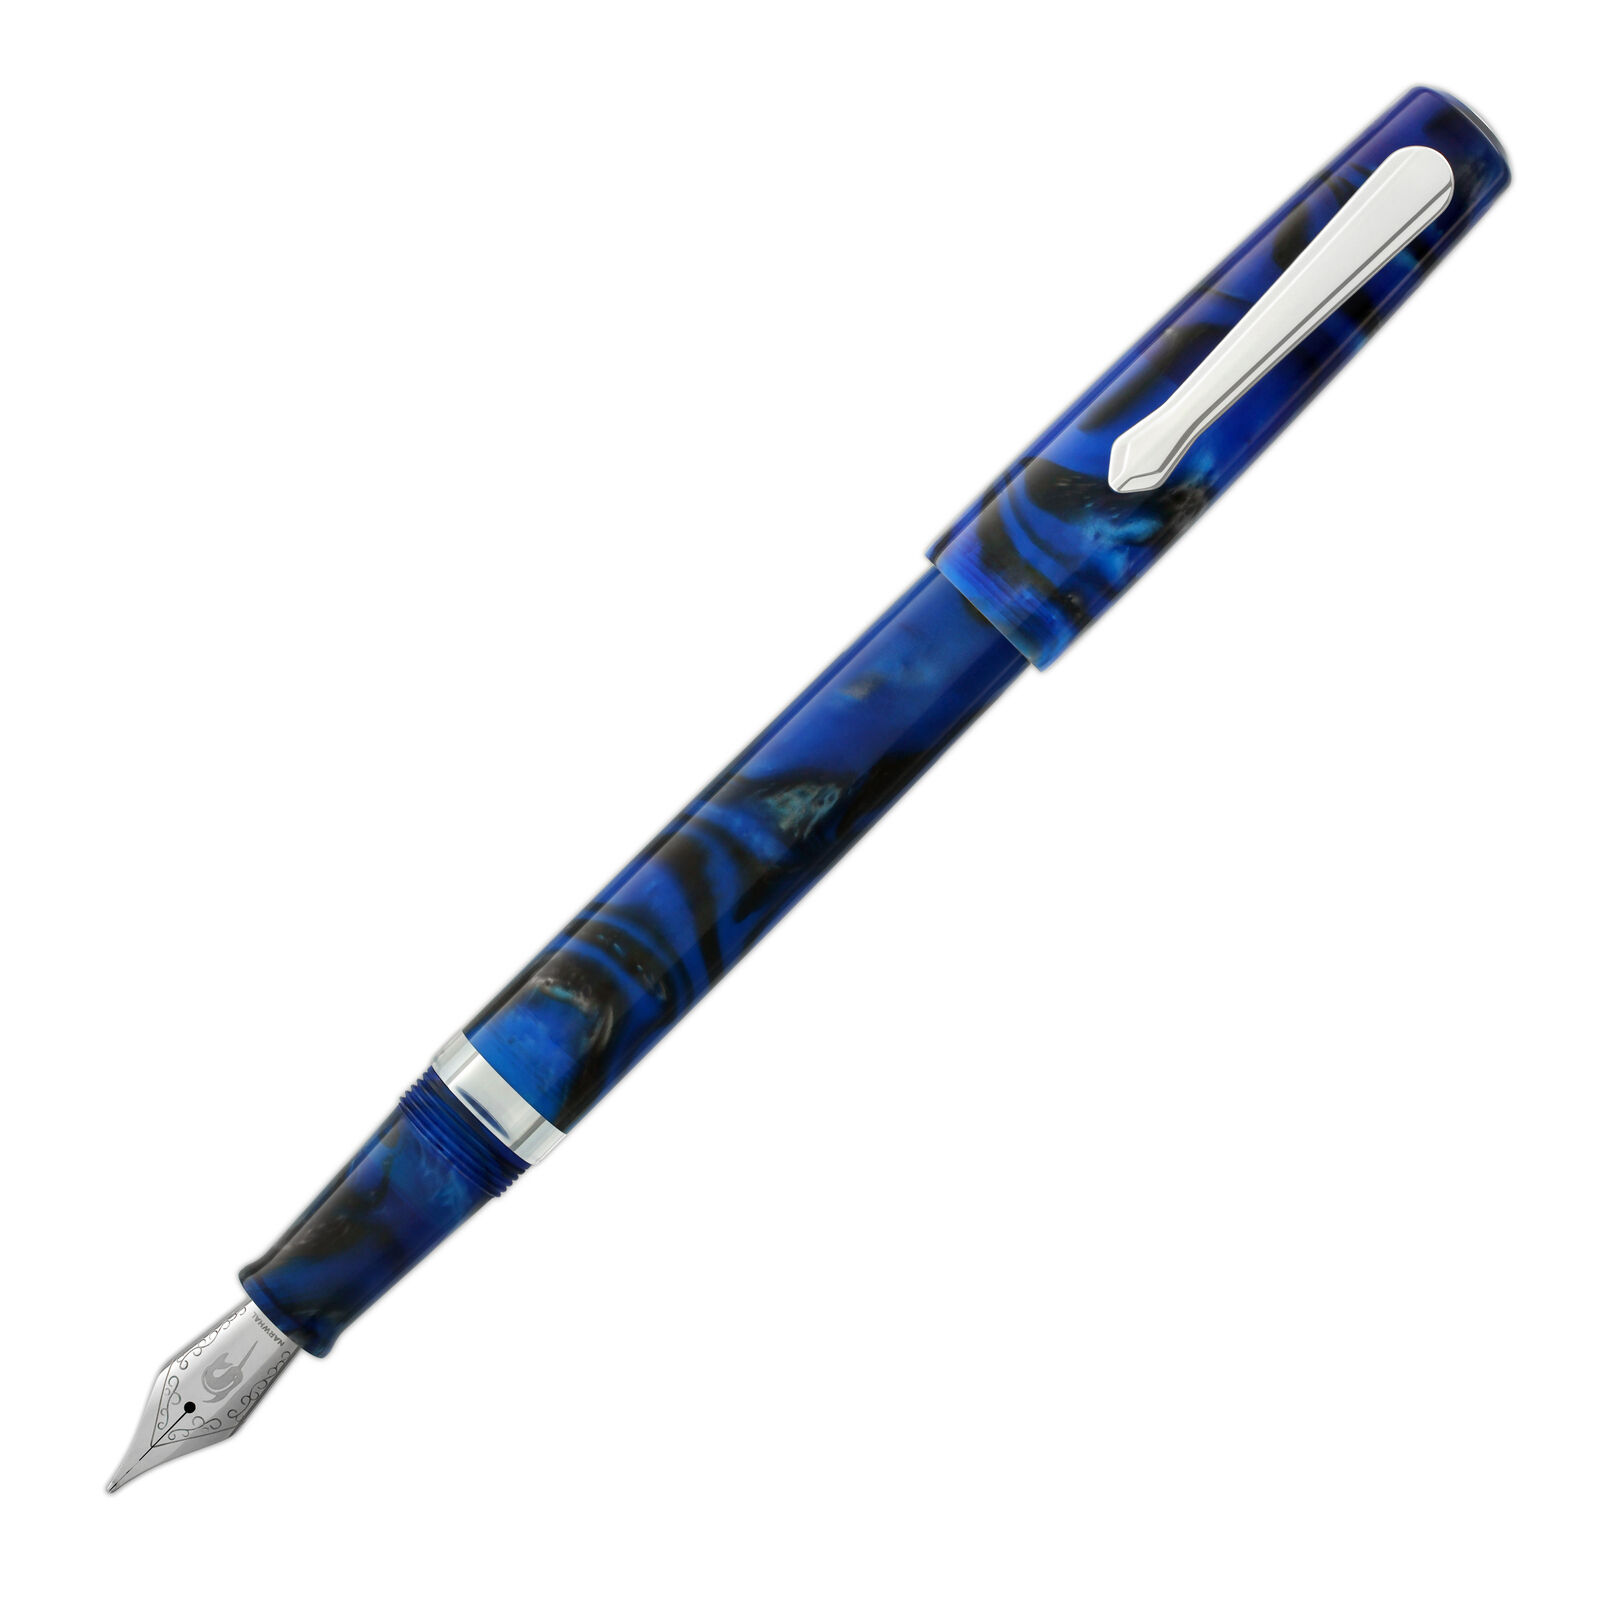 Narwhal Schuylkill Fountain Pen in Marlin Blue - Medium  - NEW in original box